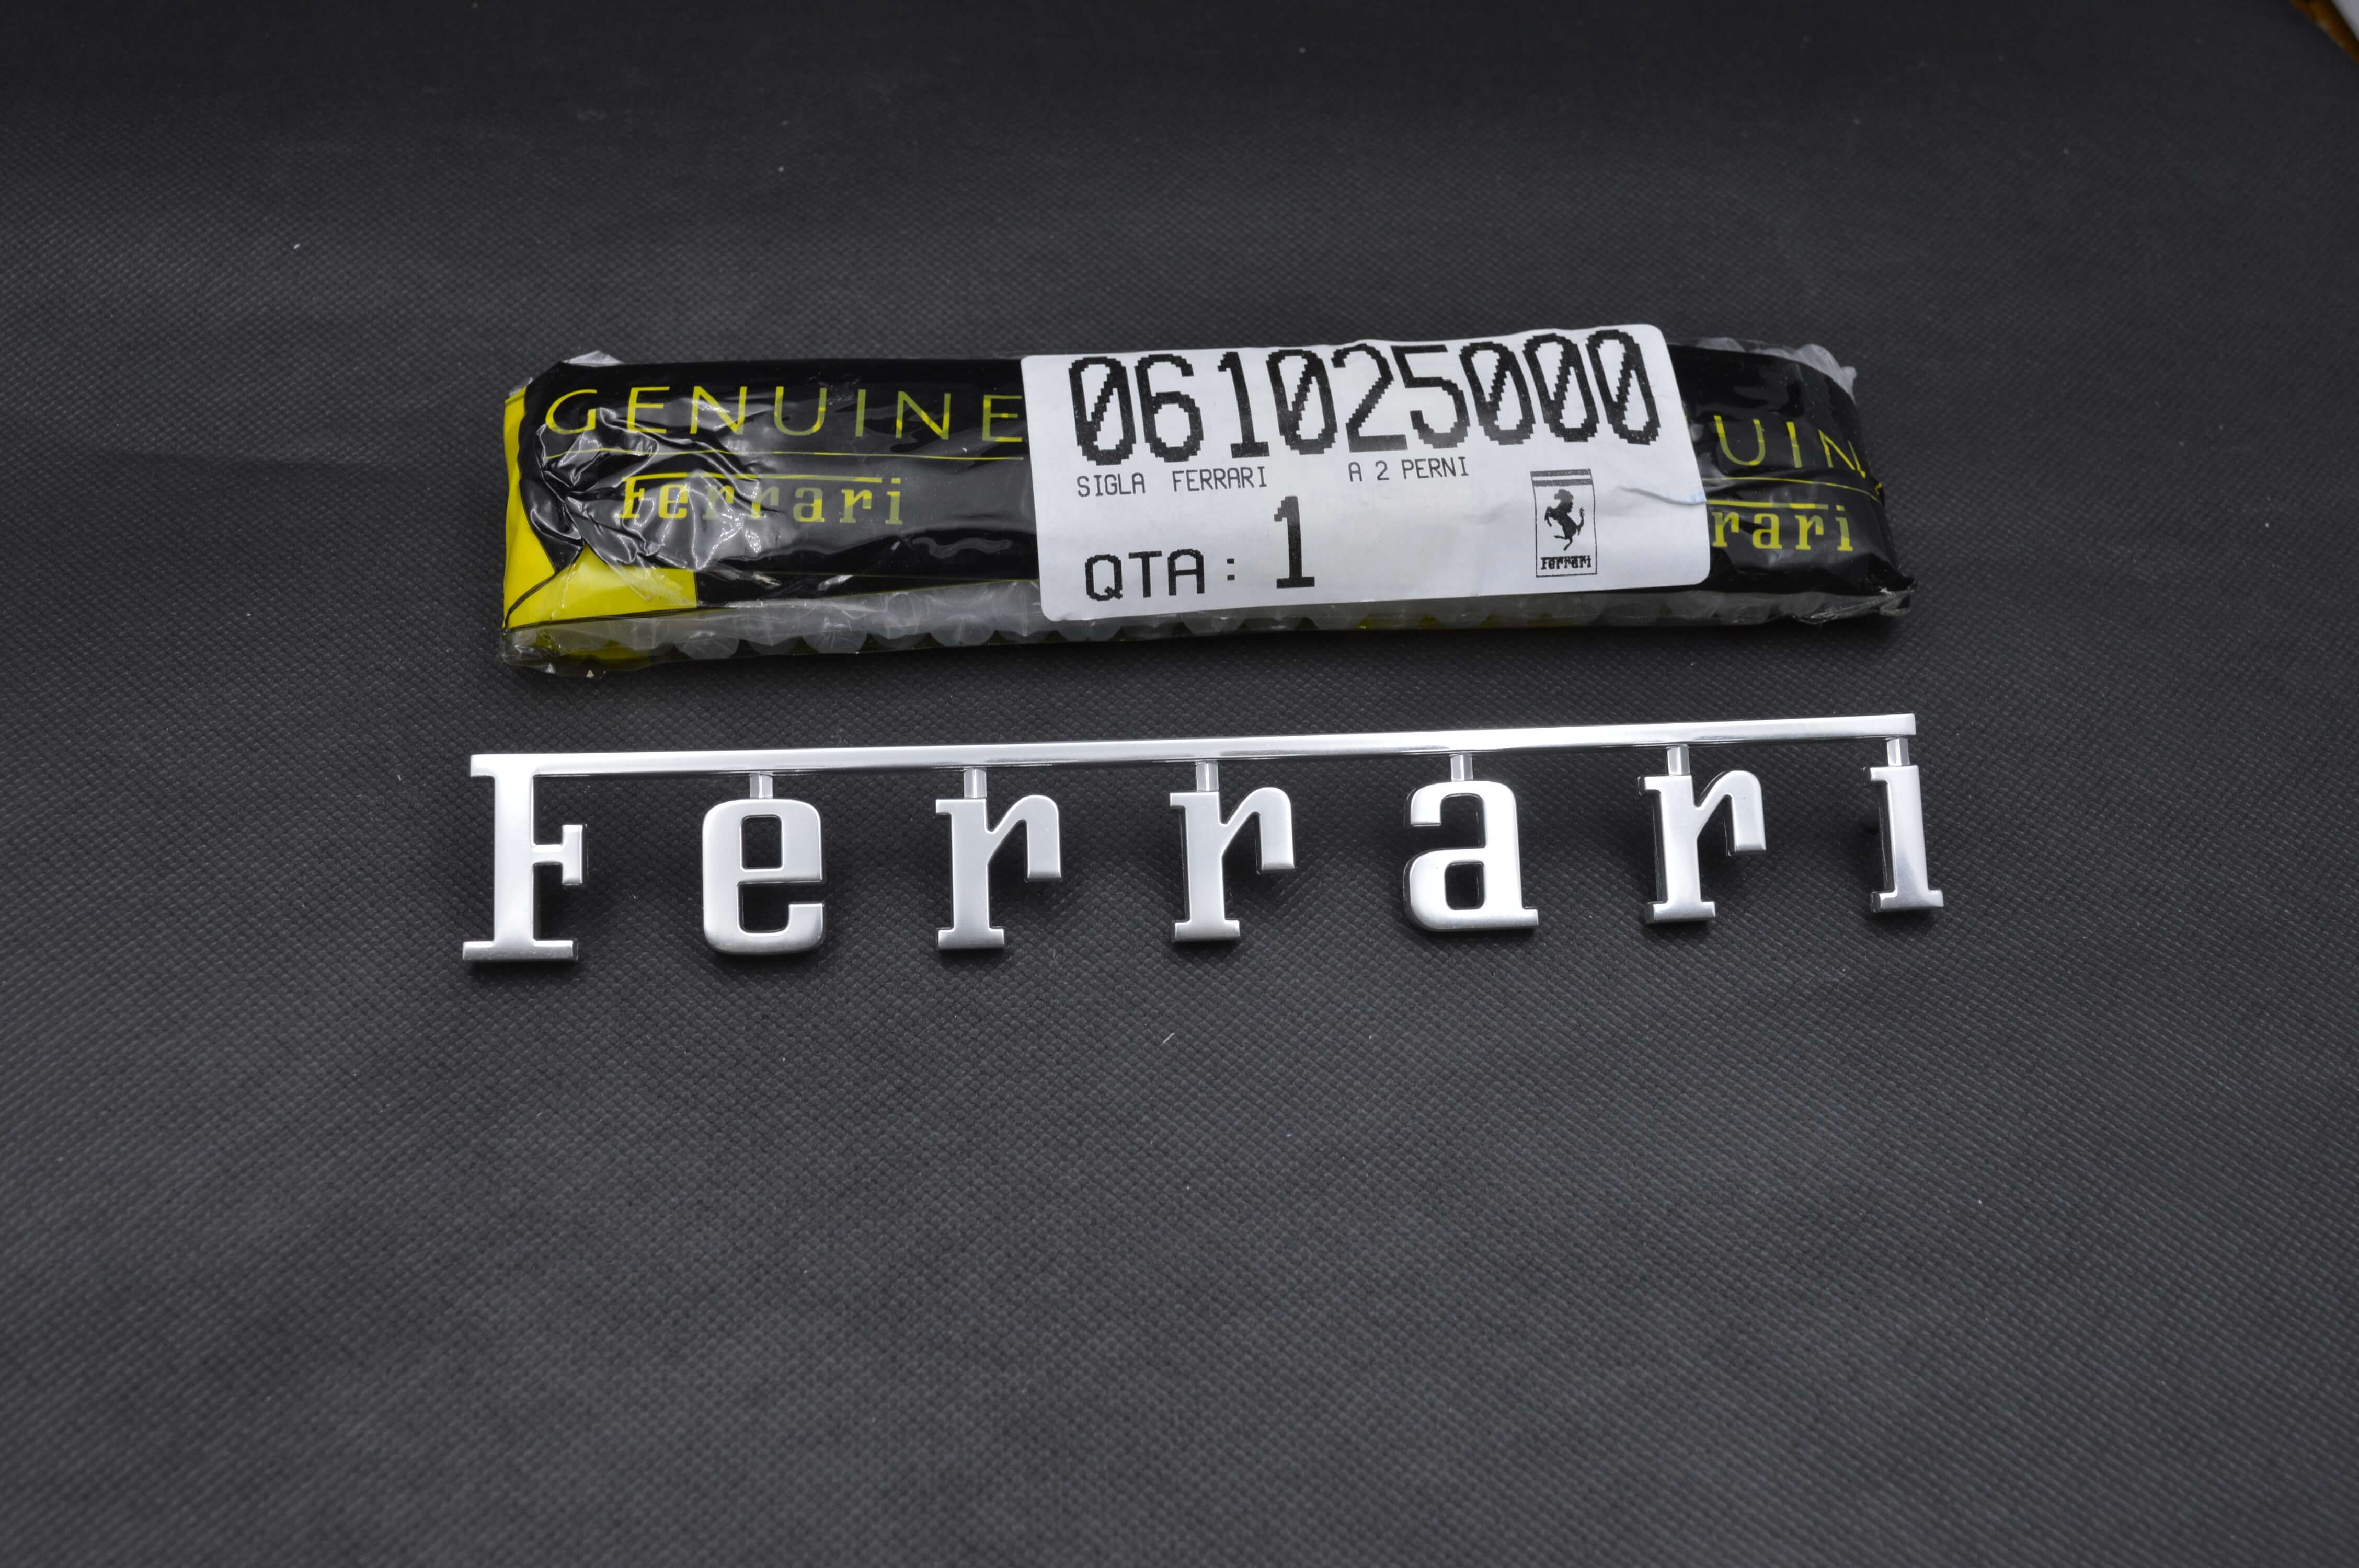 Genuine Ferrari 360 F430 F458 488 Rear Script Emblem Badge 61025000 Factory